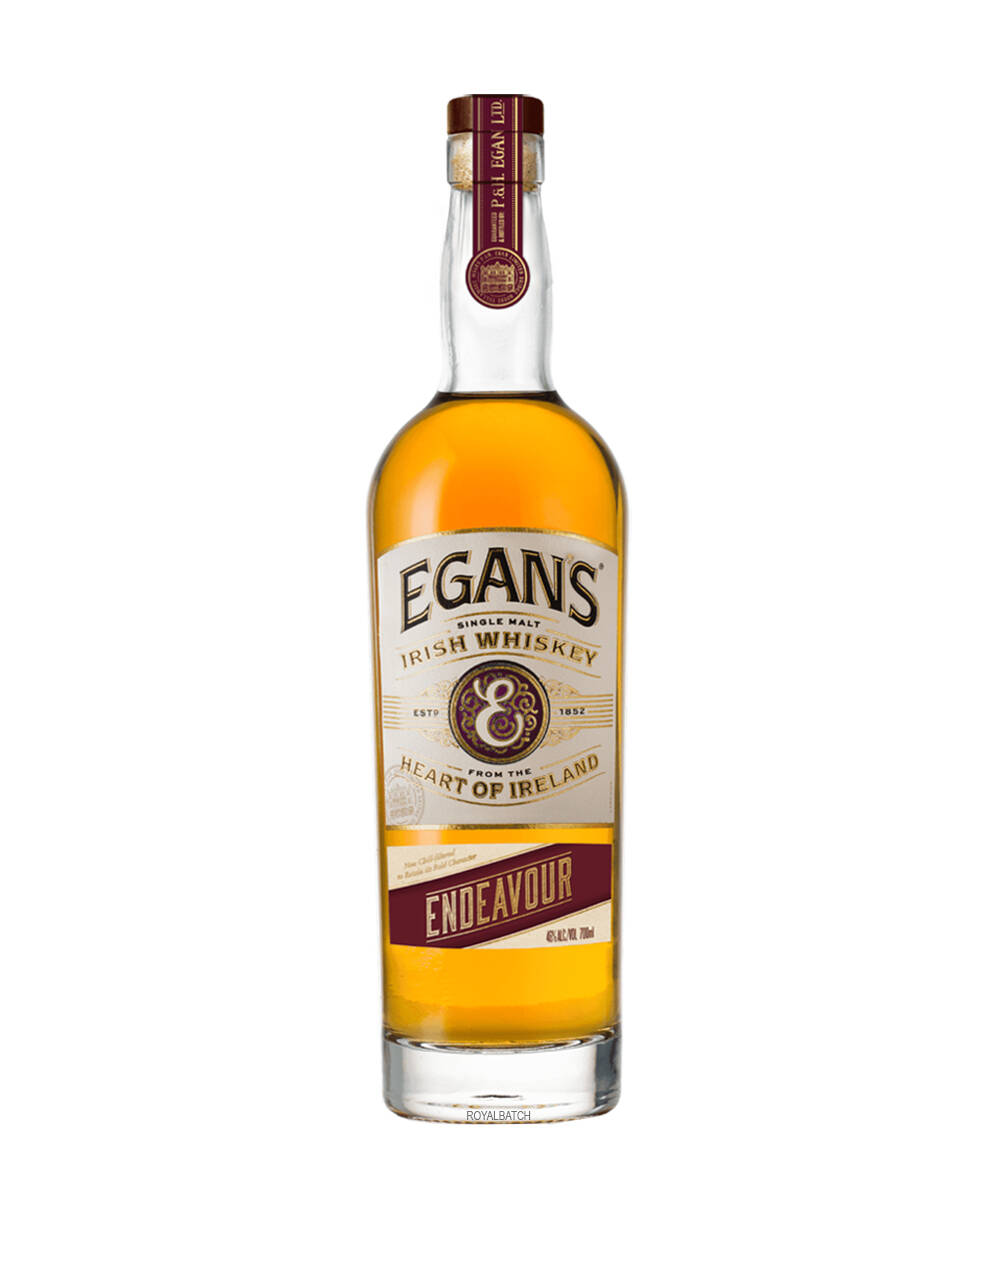 Egans Endeavour Single Malt Irish Whiskey